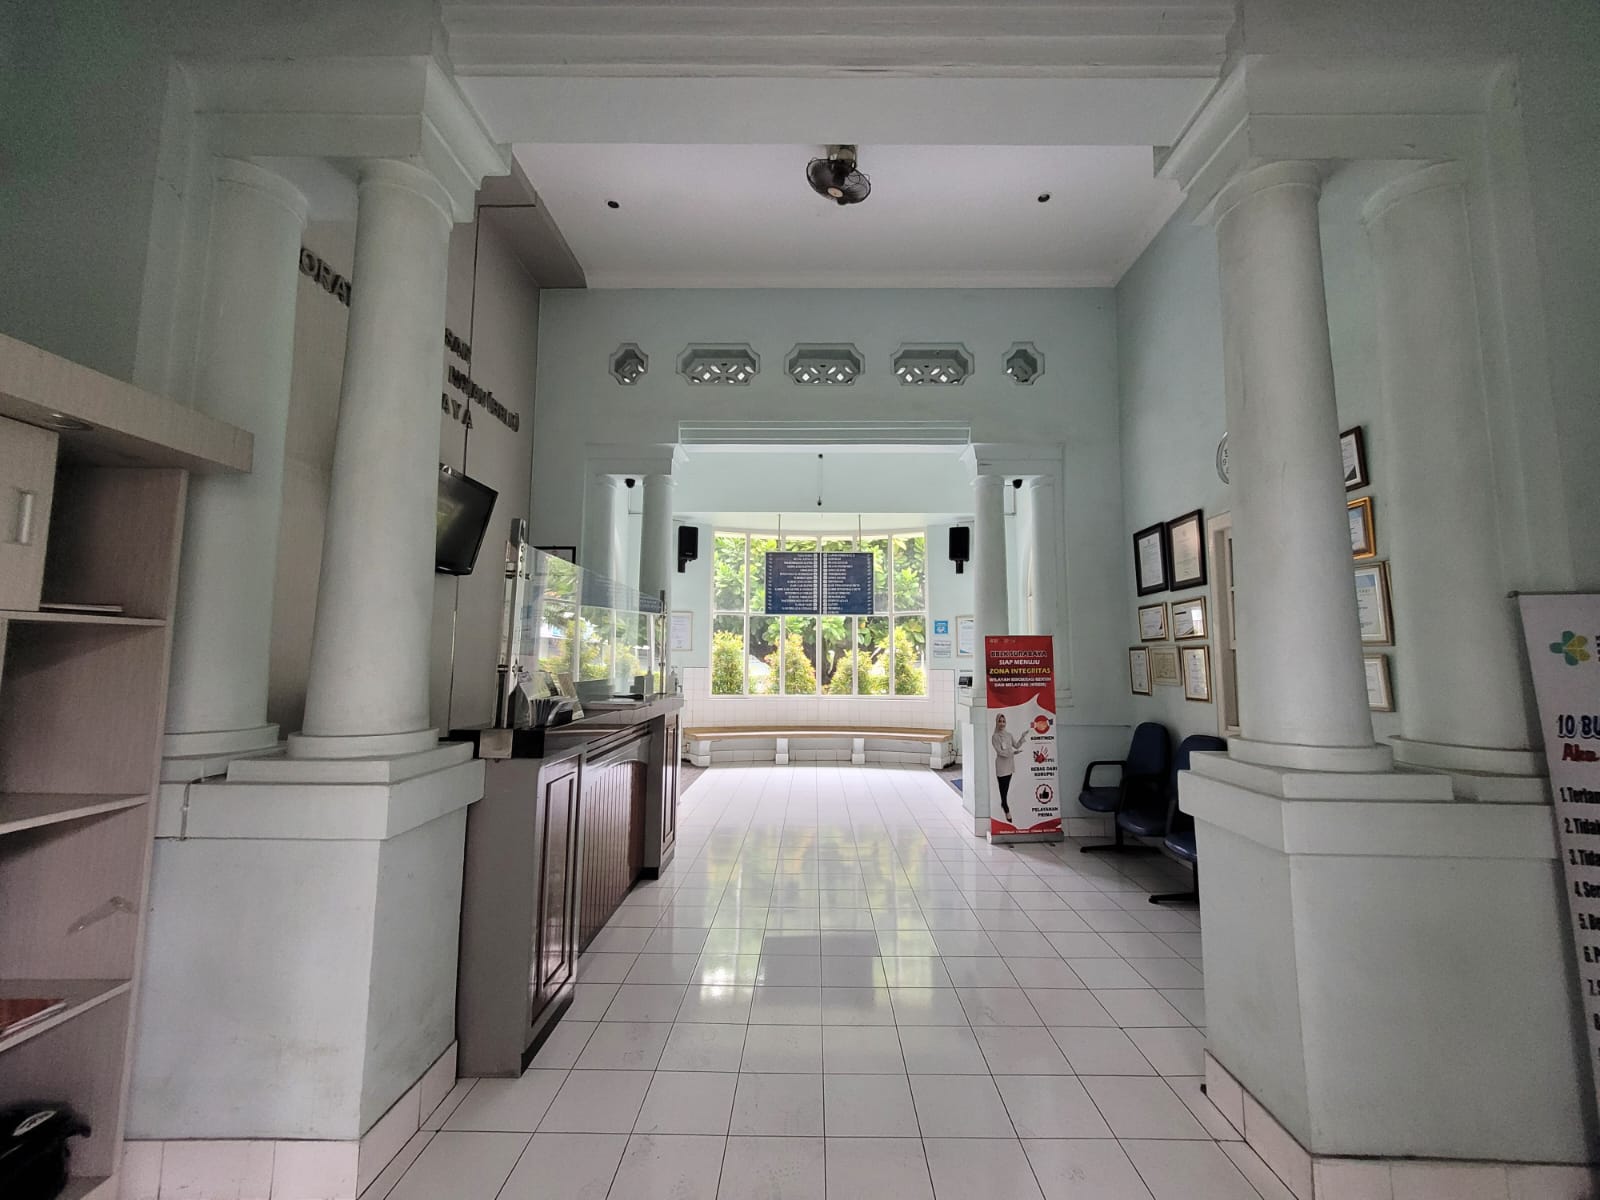 Balai Besar Laboratorium Kesehatan Surabaya